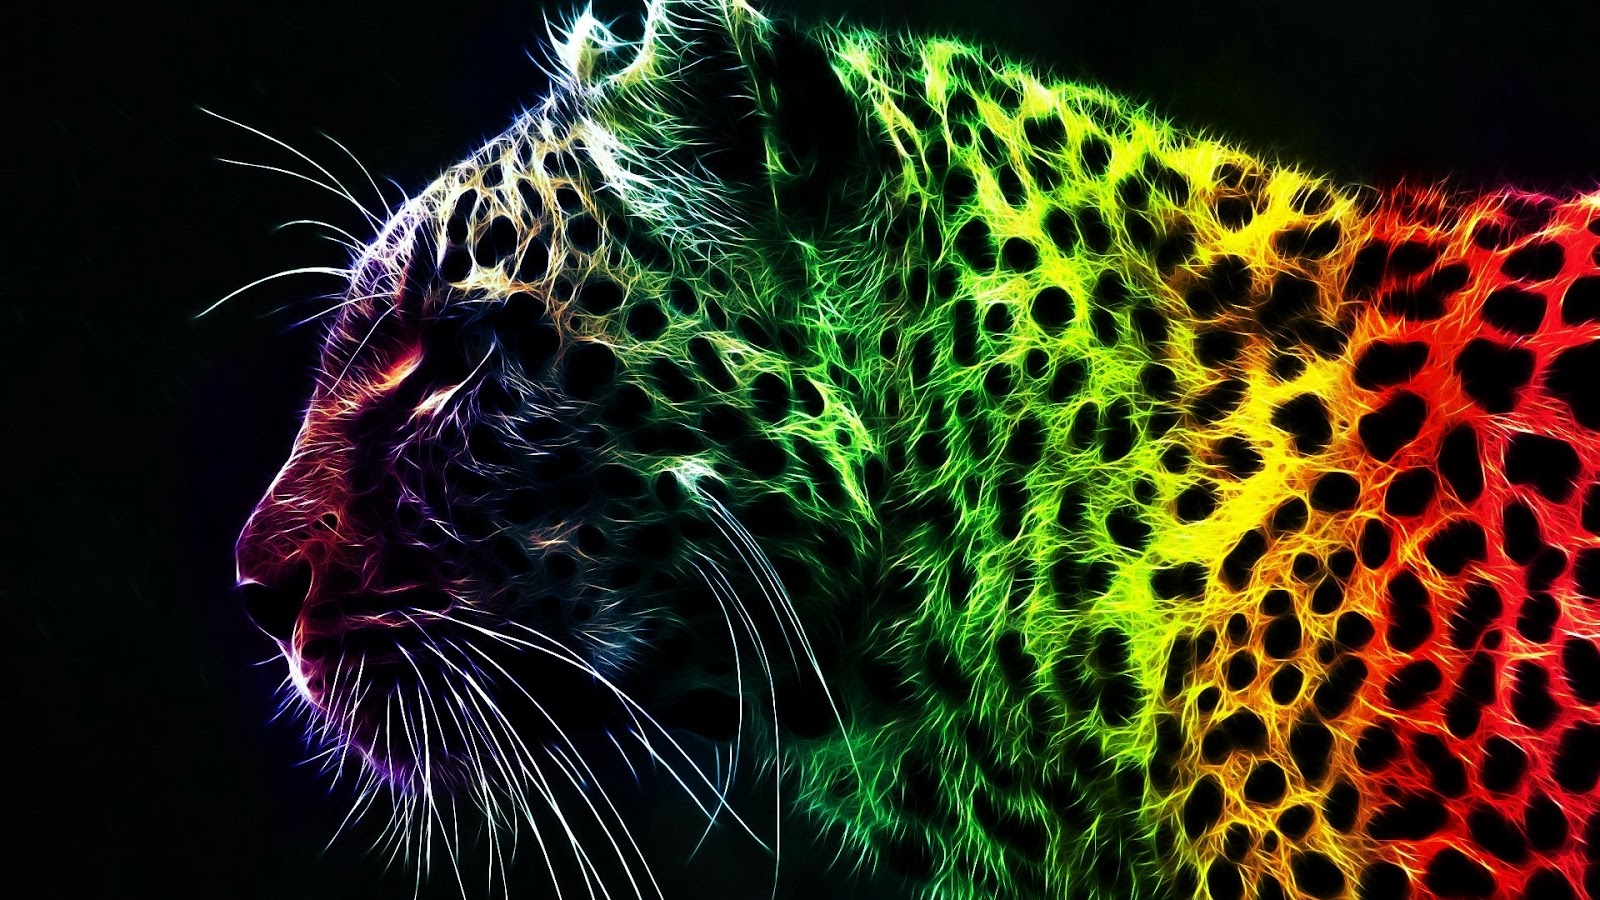 Abstract Cheetah Animal Picture HD Wallpaper Jpg